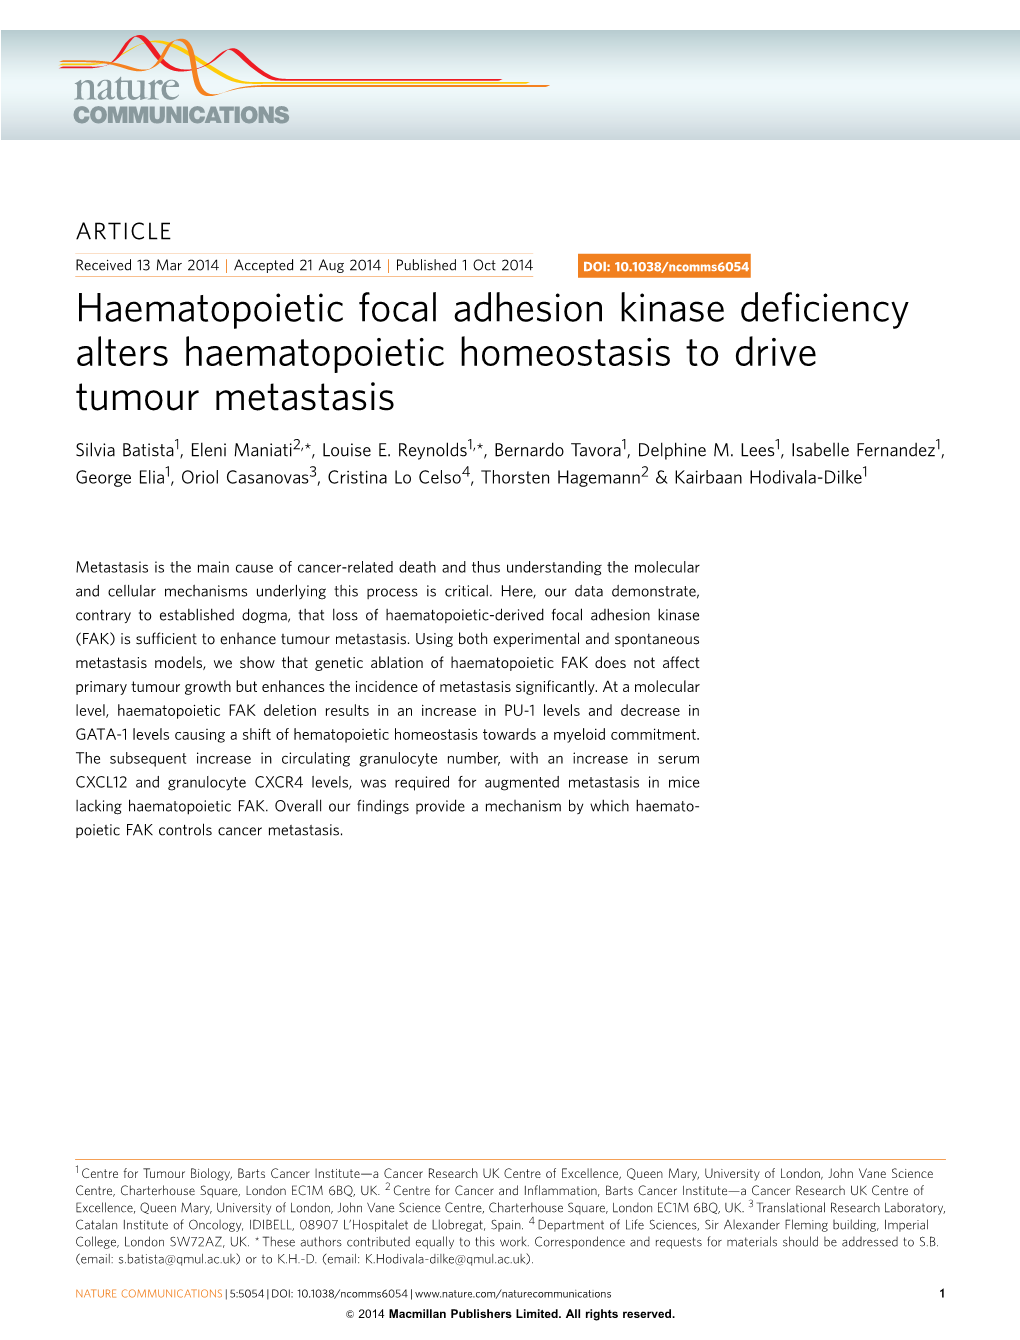 Haematopoietic Focal Adhesion Kinase Deficiency Alters Haematopoietic